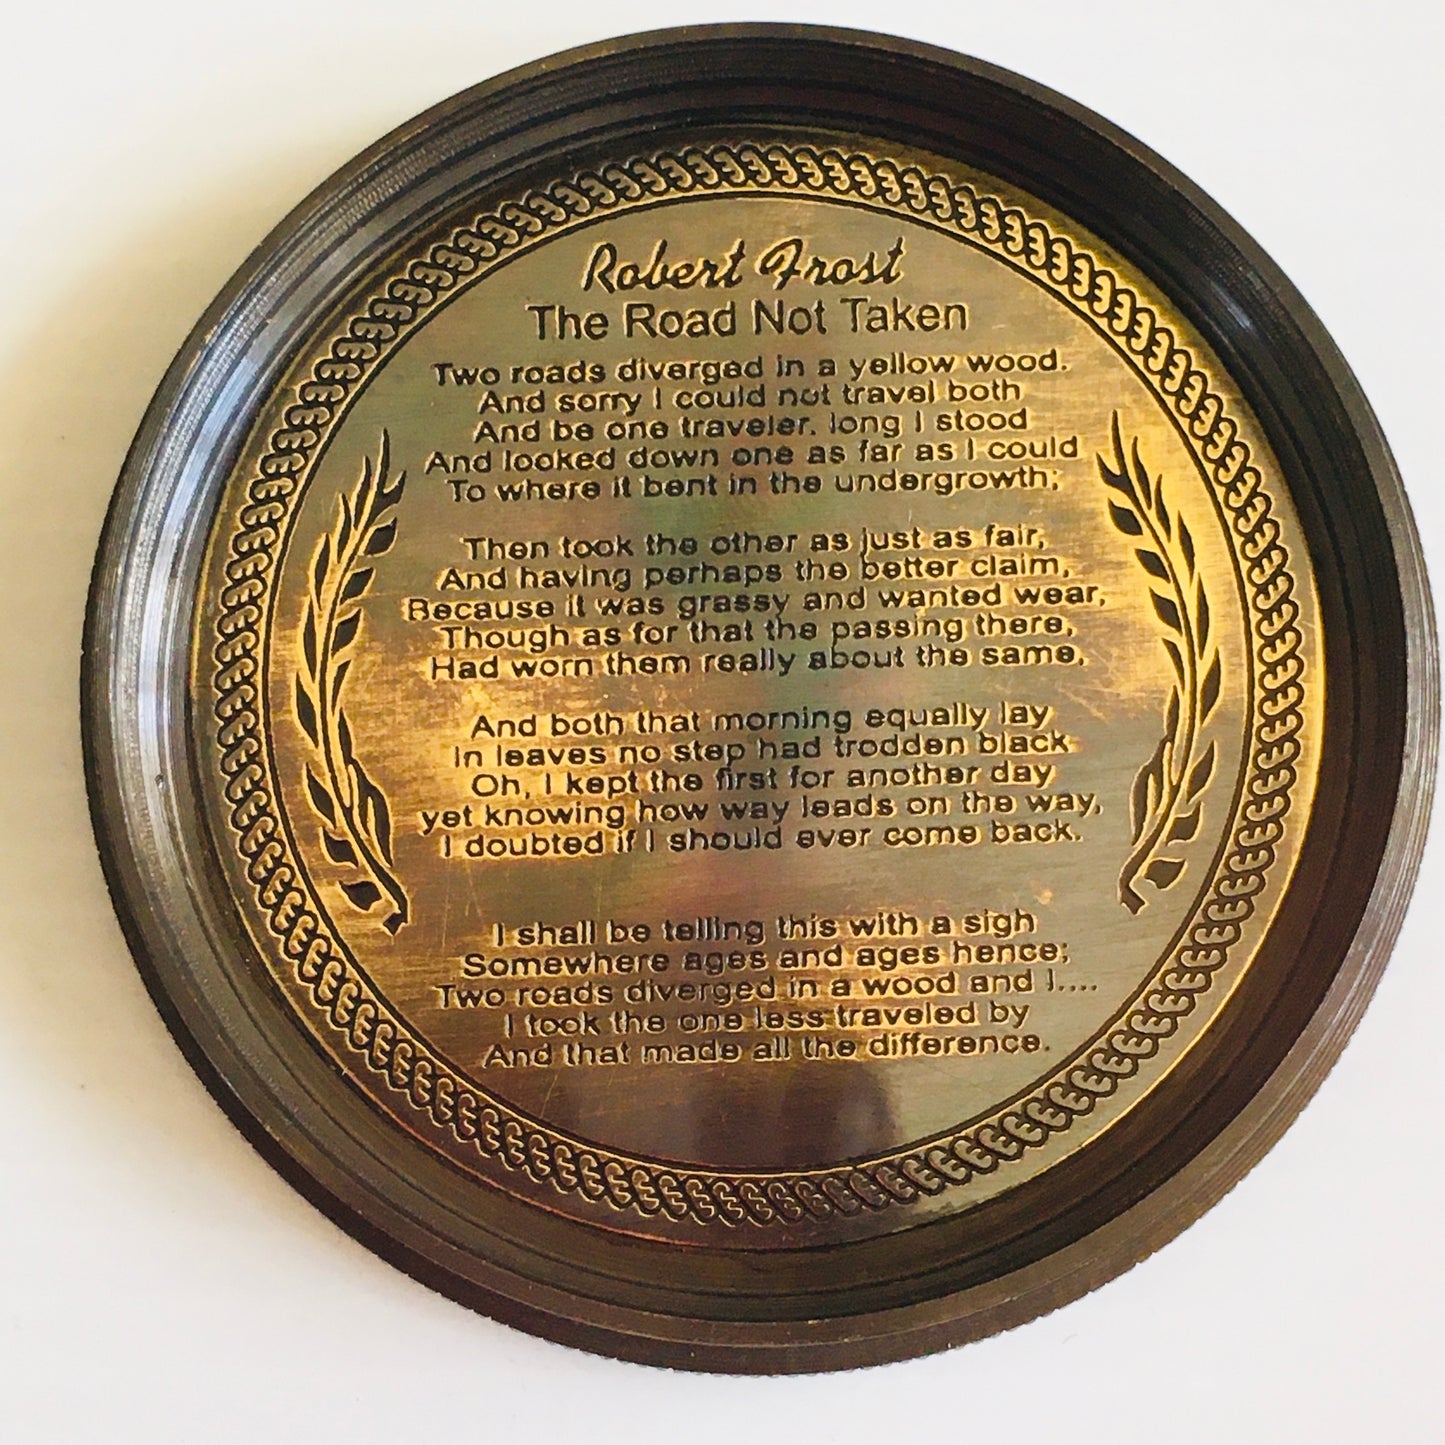 New 2” Solid Brass Compass Coronation of Elizabeth June1953)